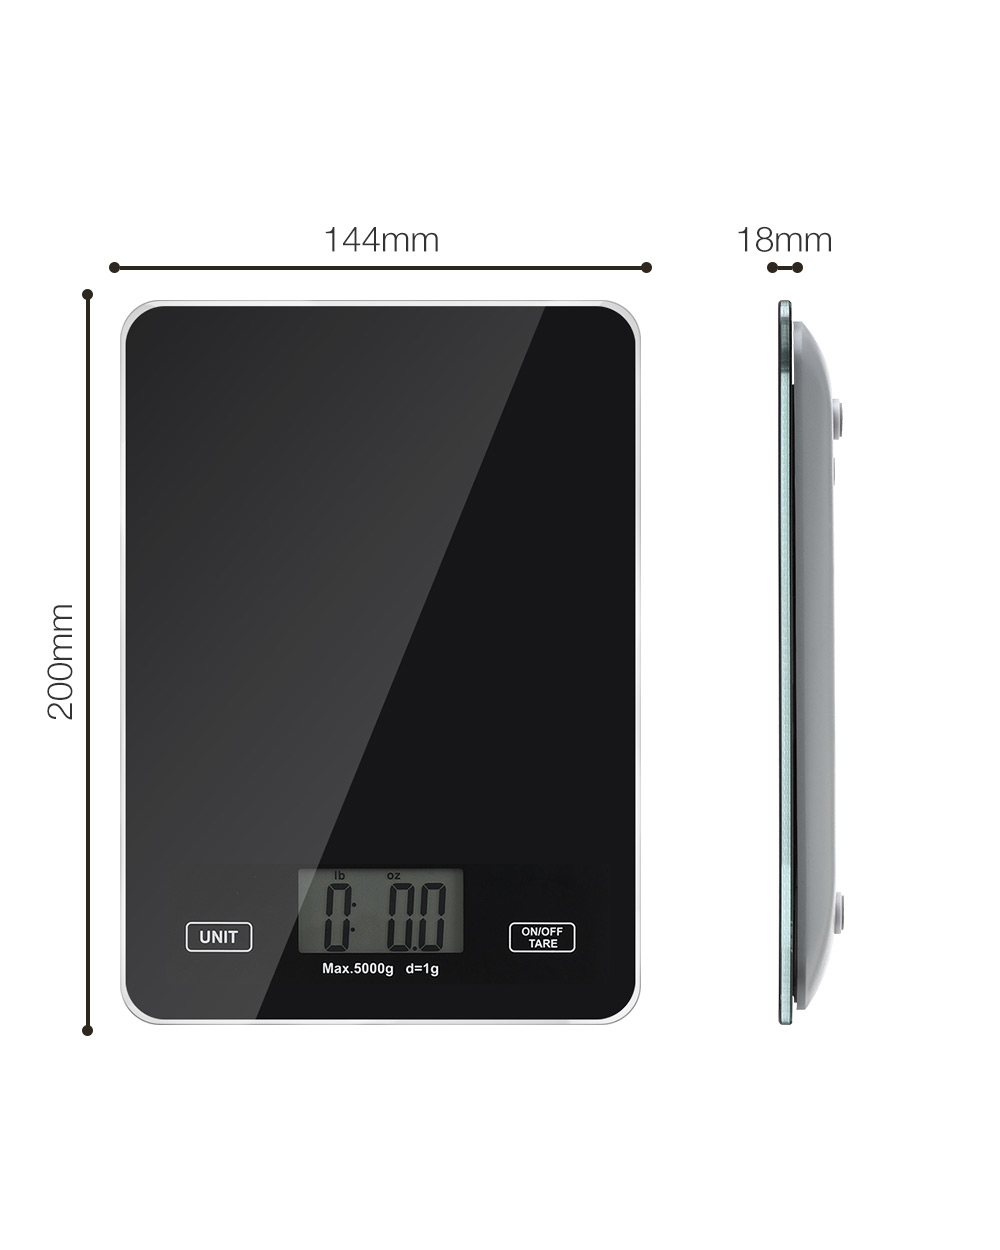 DIGOO-DG-TGK1-Digital-Kitchen-Toughened-Glass-Scale-1g5kg-Food-Scale-Ultra-Slim-Tempered-Glass-LCD-D-1526820-9